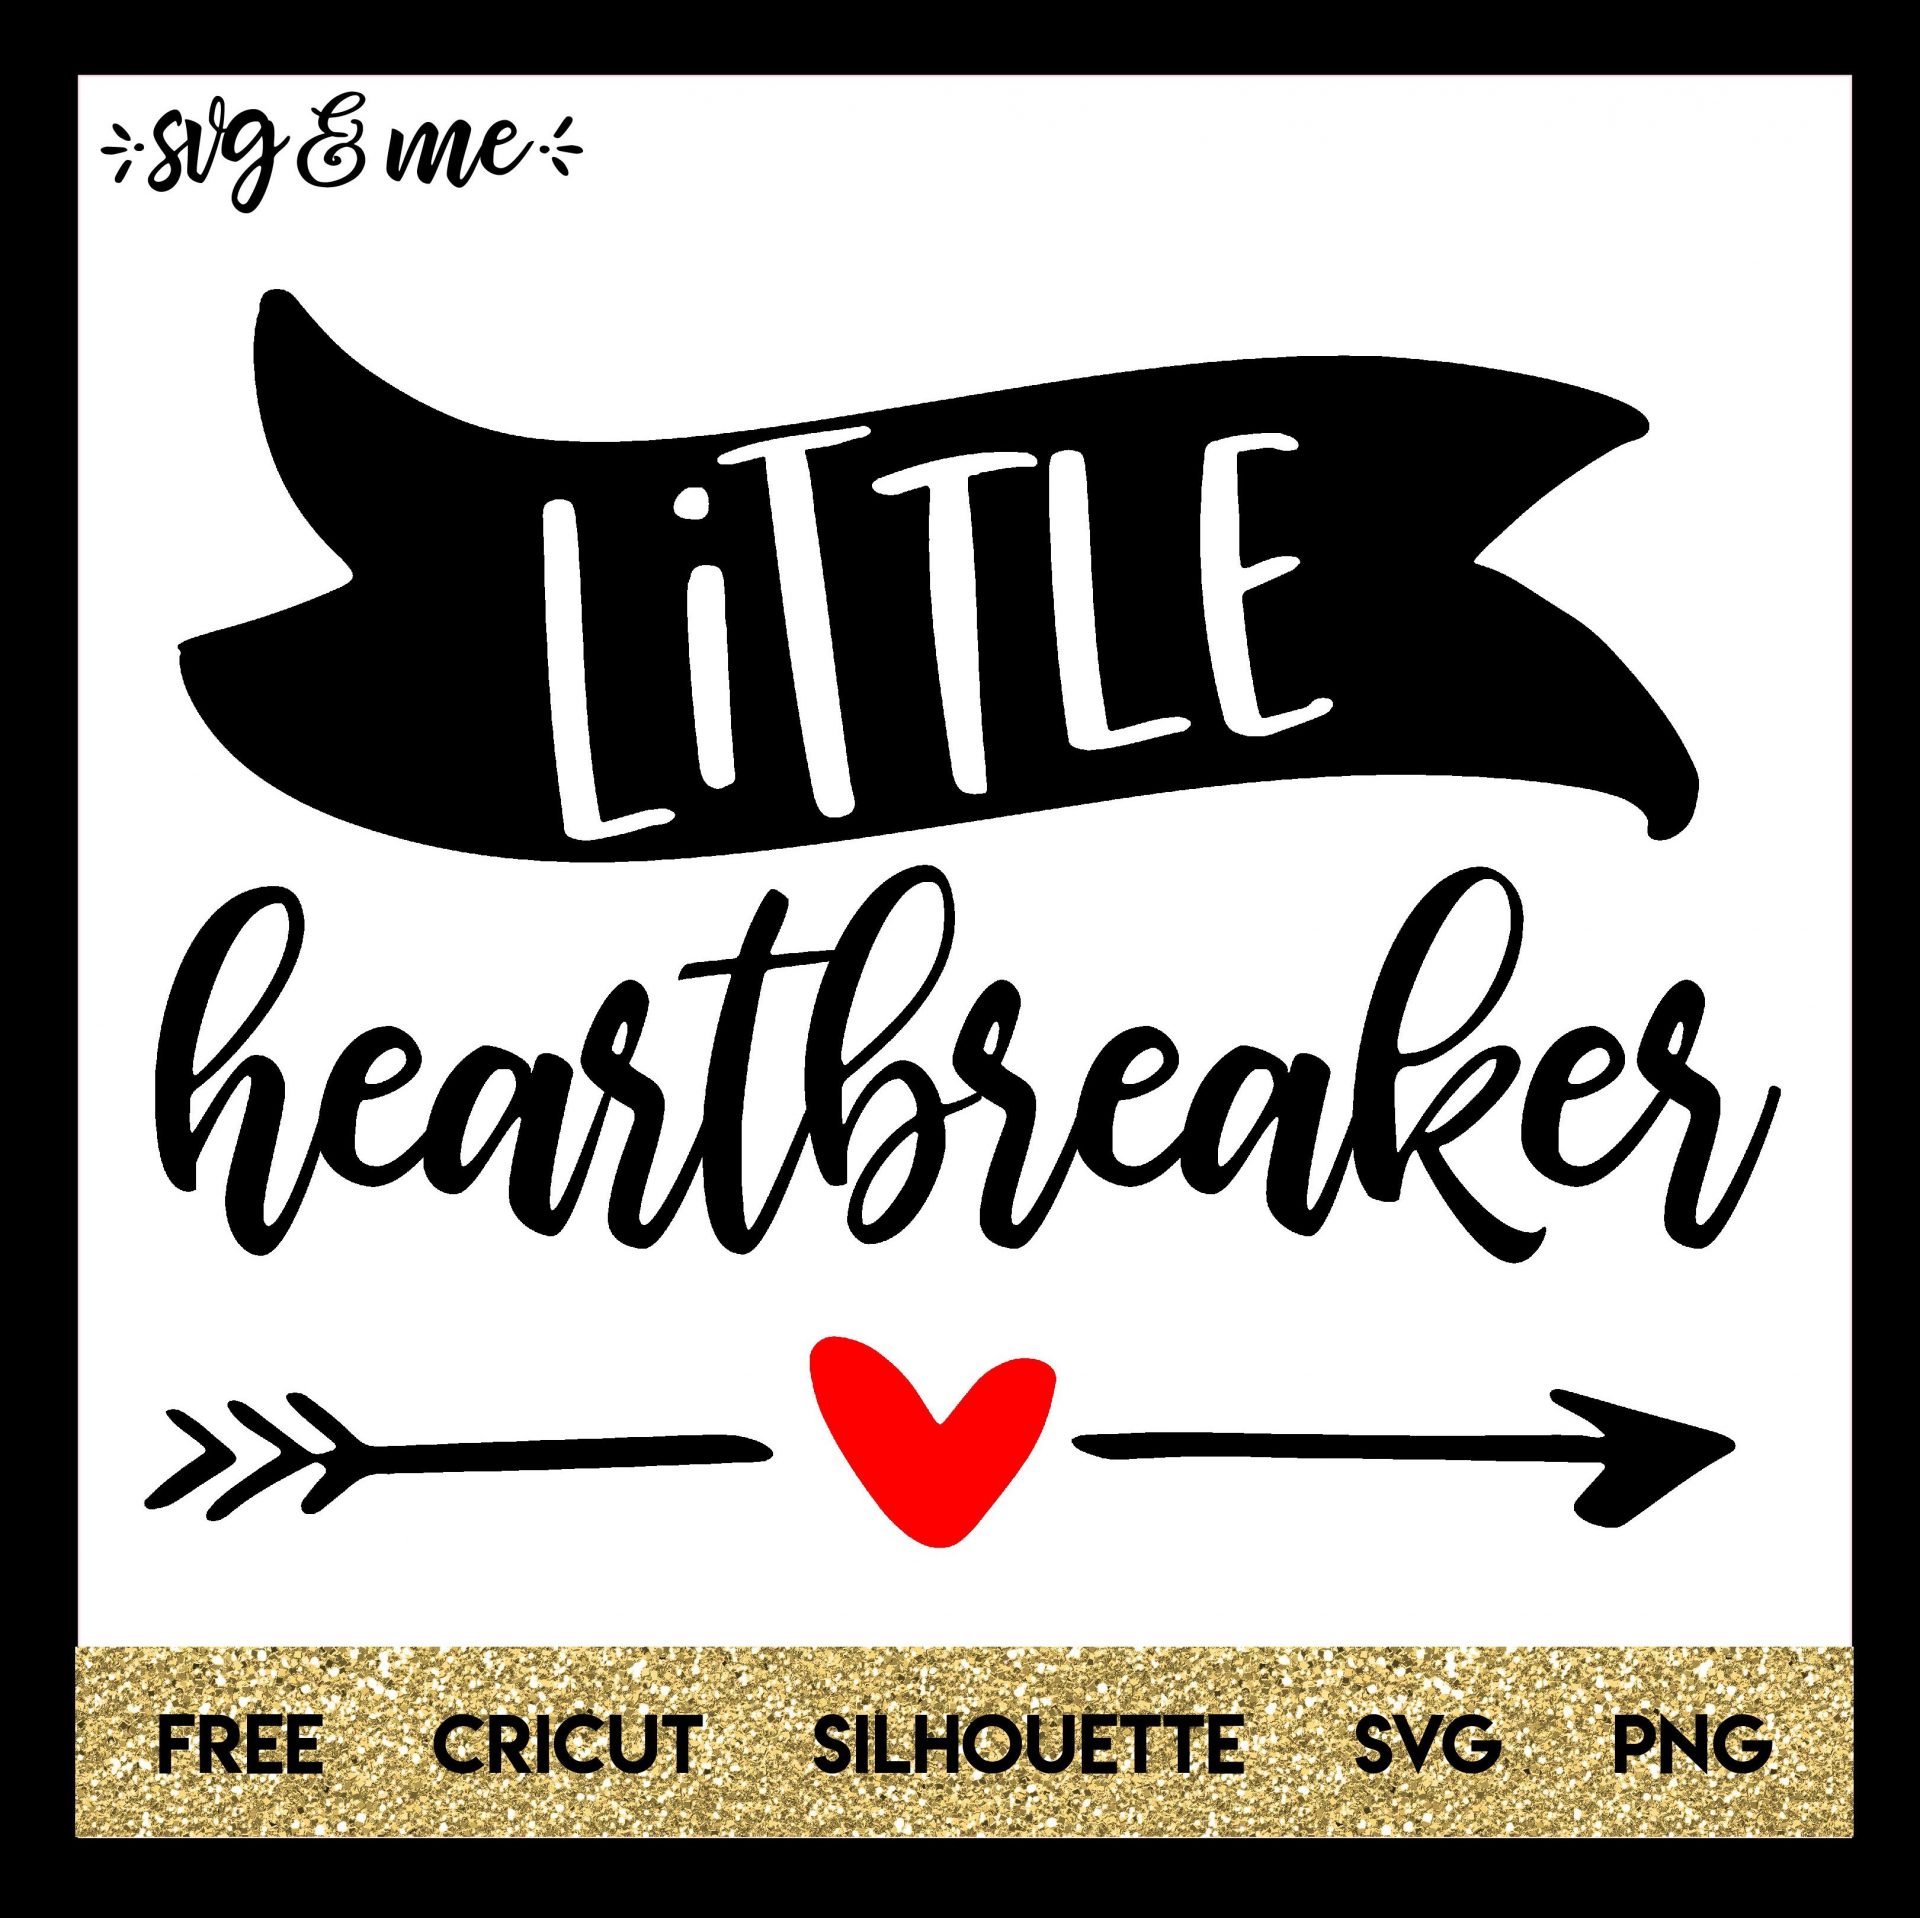 FREE SVG CUT FILE for Cricut, Silhouette and more - Little Heartbreaker Valentine's Day